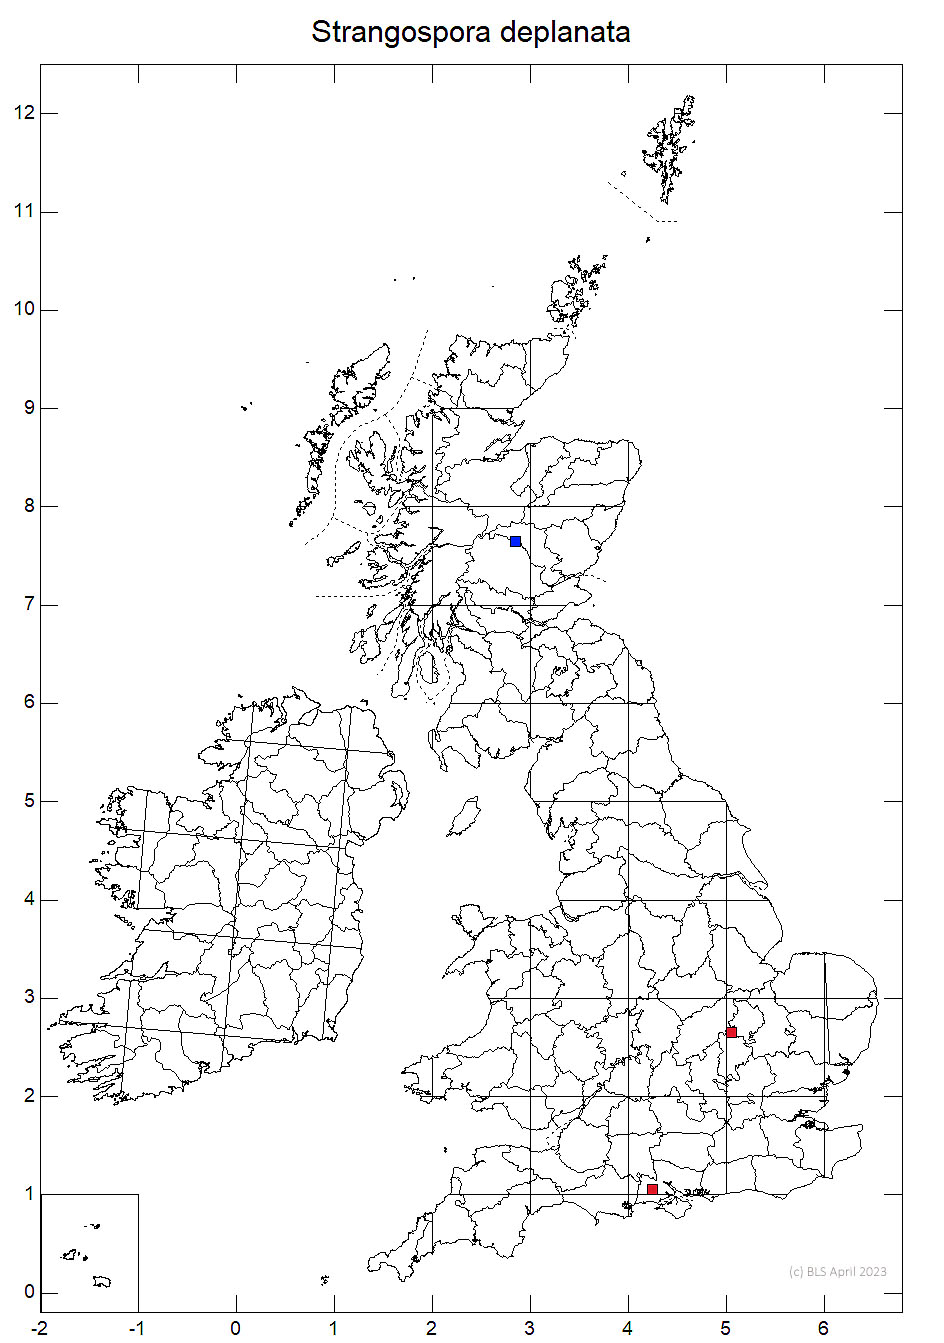 Strangospora deplanata 10km sq distribution map